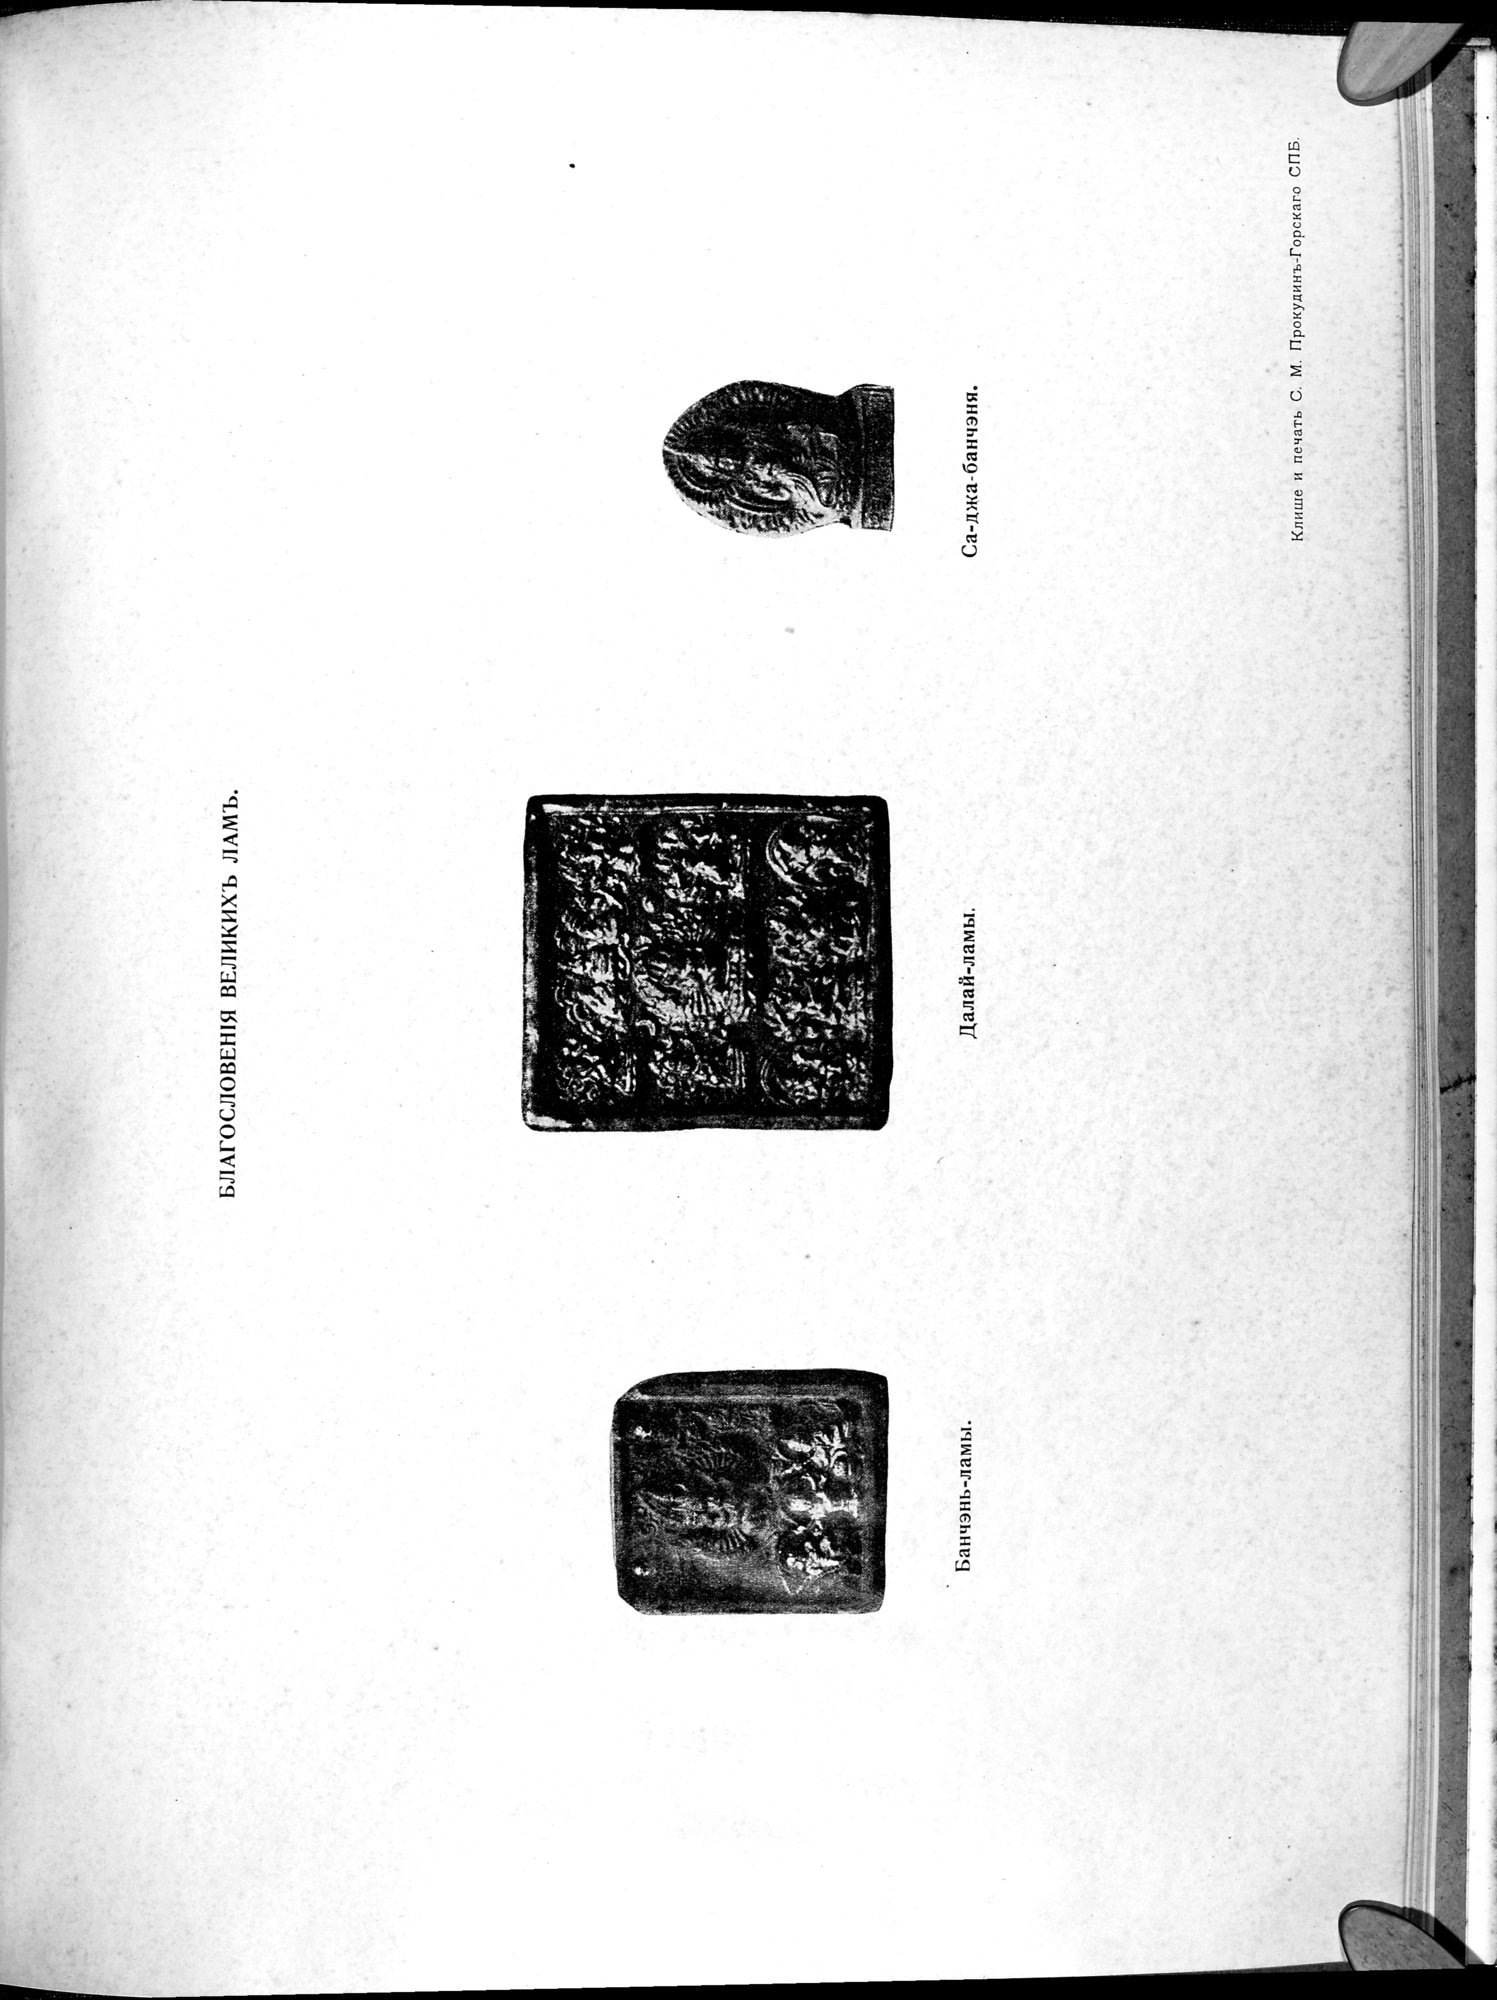 Mongoliia i Kam : vol.3 / Page 161 (Grayscale High Resolution Image)